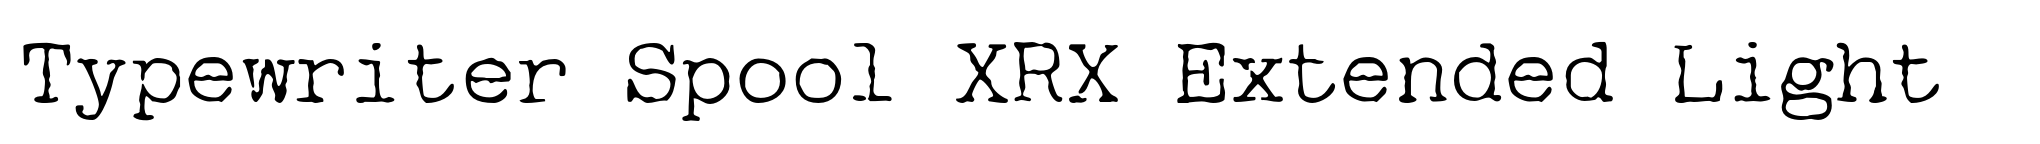 Typewriter Spool XRX Extended Light image